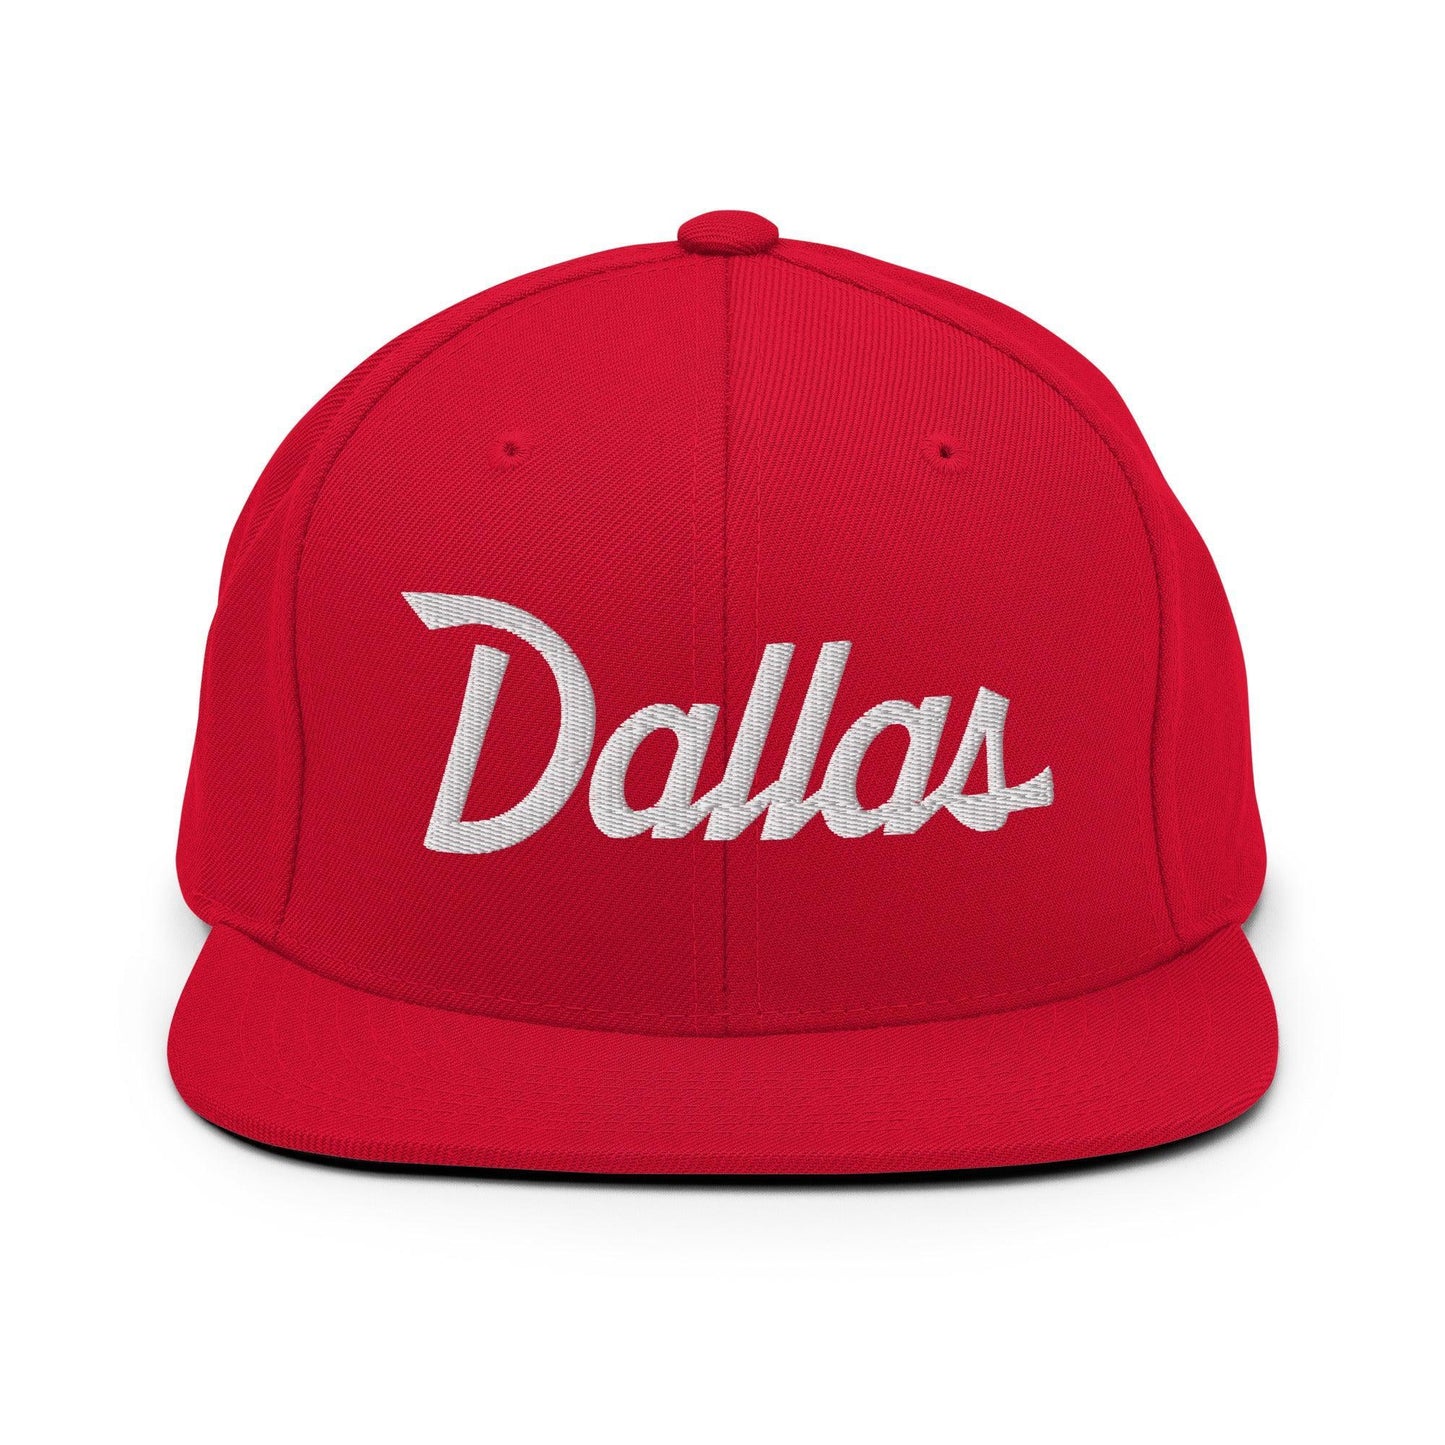 Dallas Script Snapback Hat Red